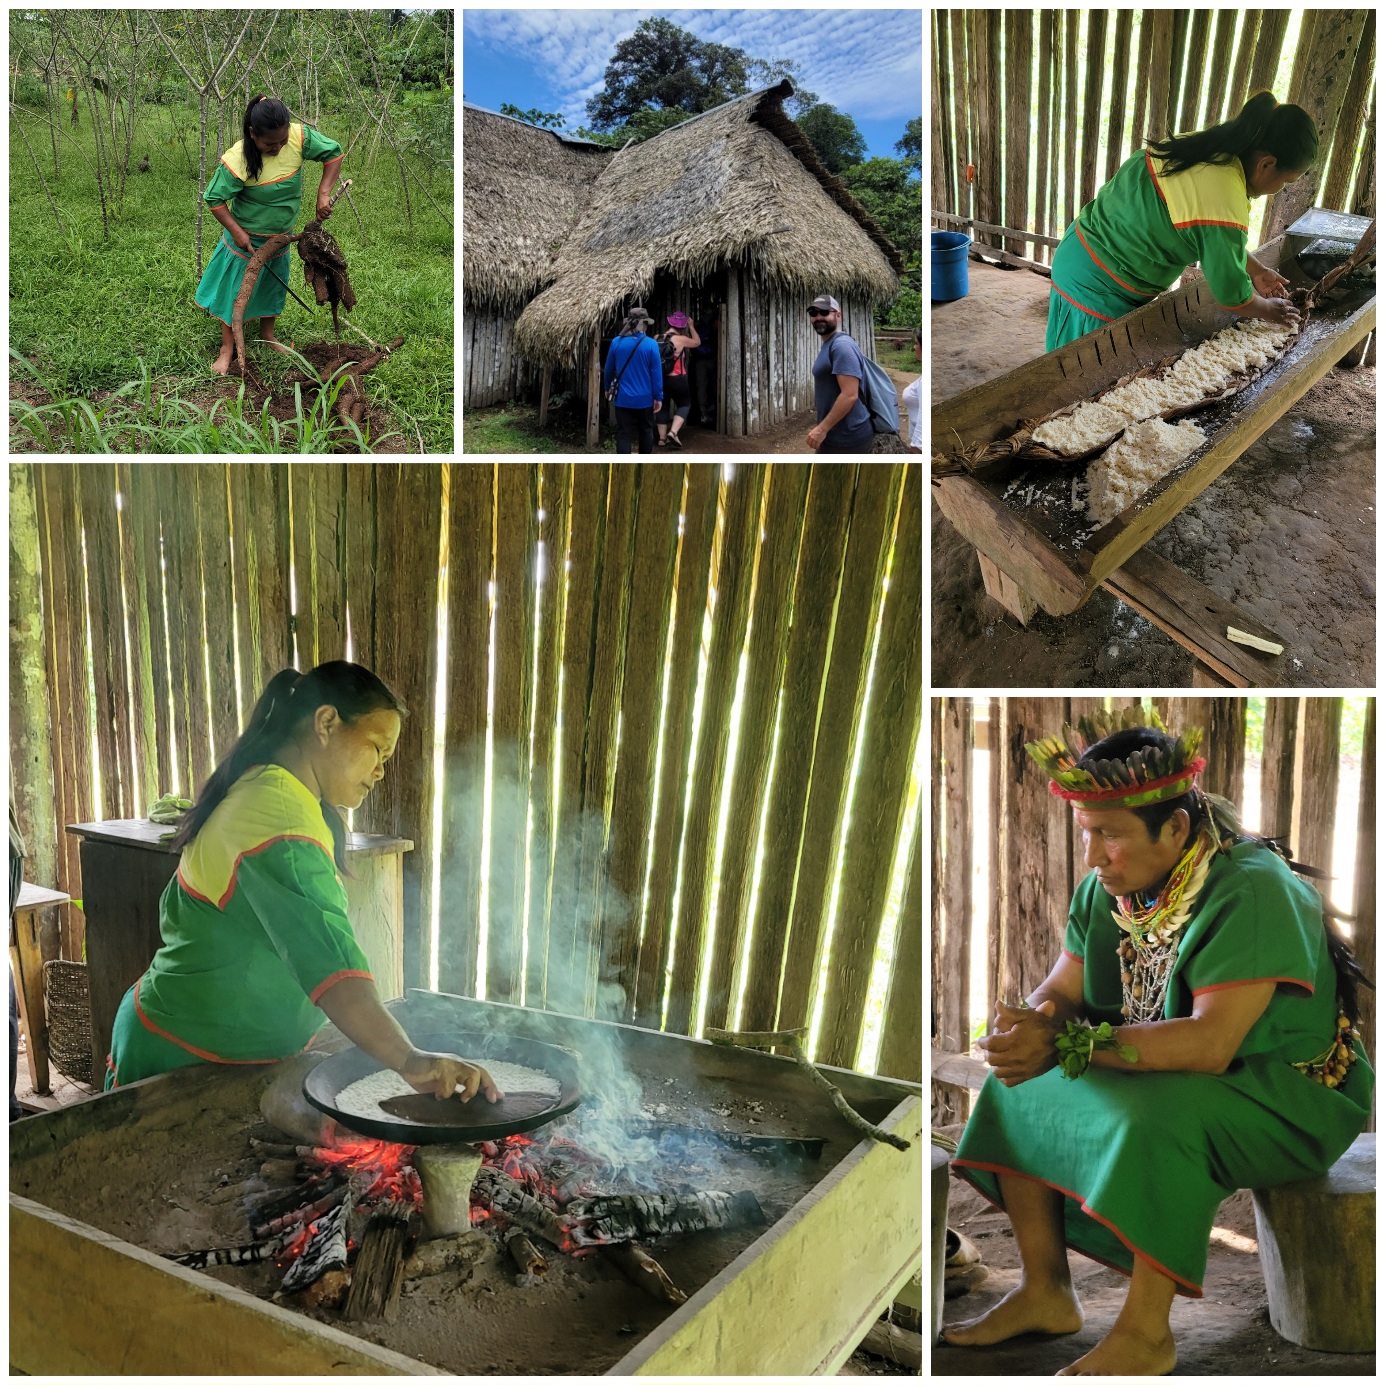 Making yuca bread and visiting a shaman at the Siona indigenous community in the Ecuador Amazon.